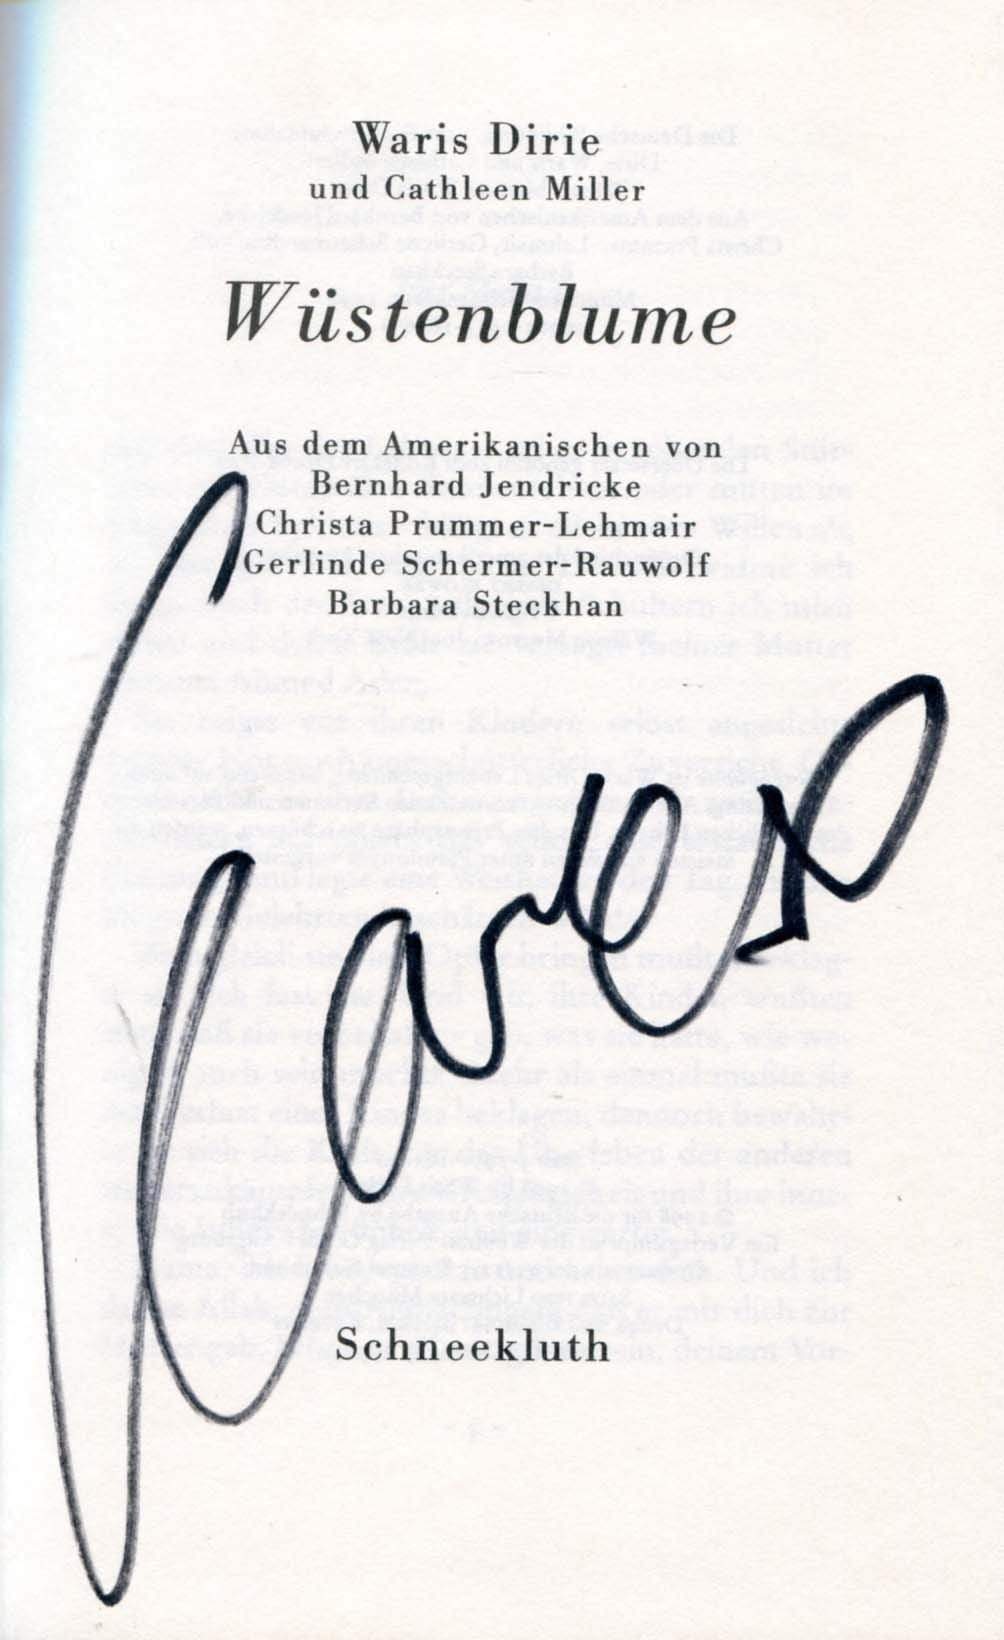 Dirie, Waris autograph